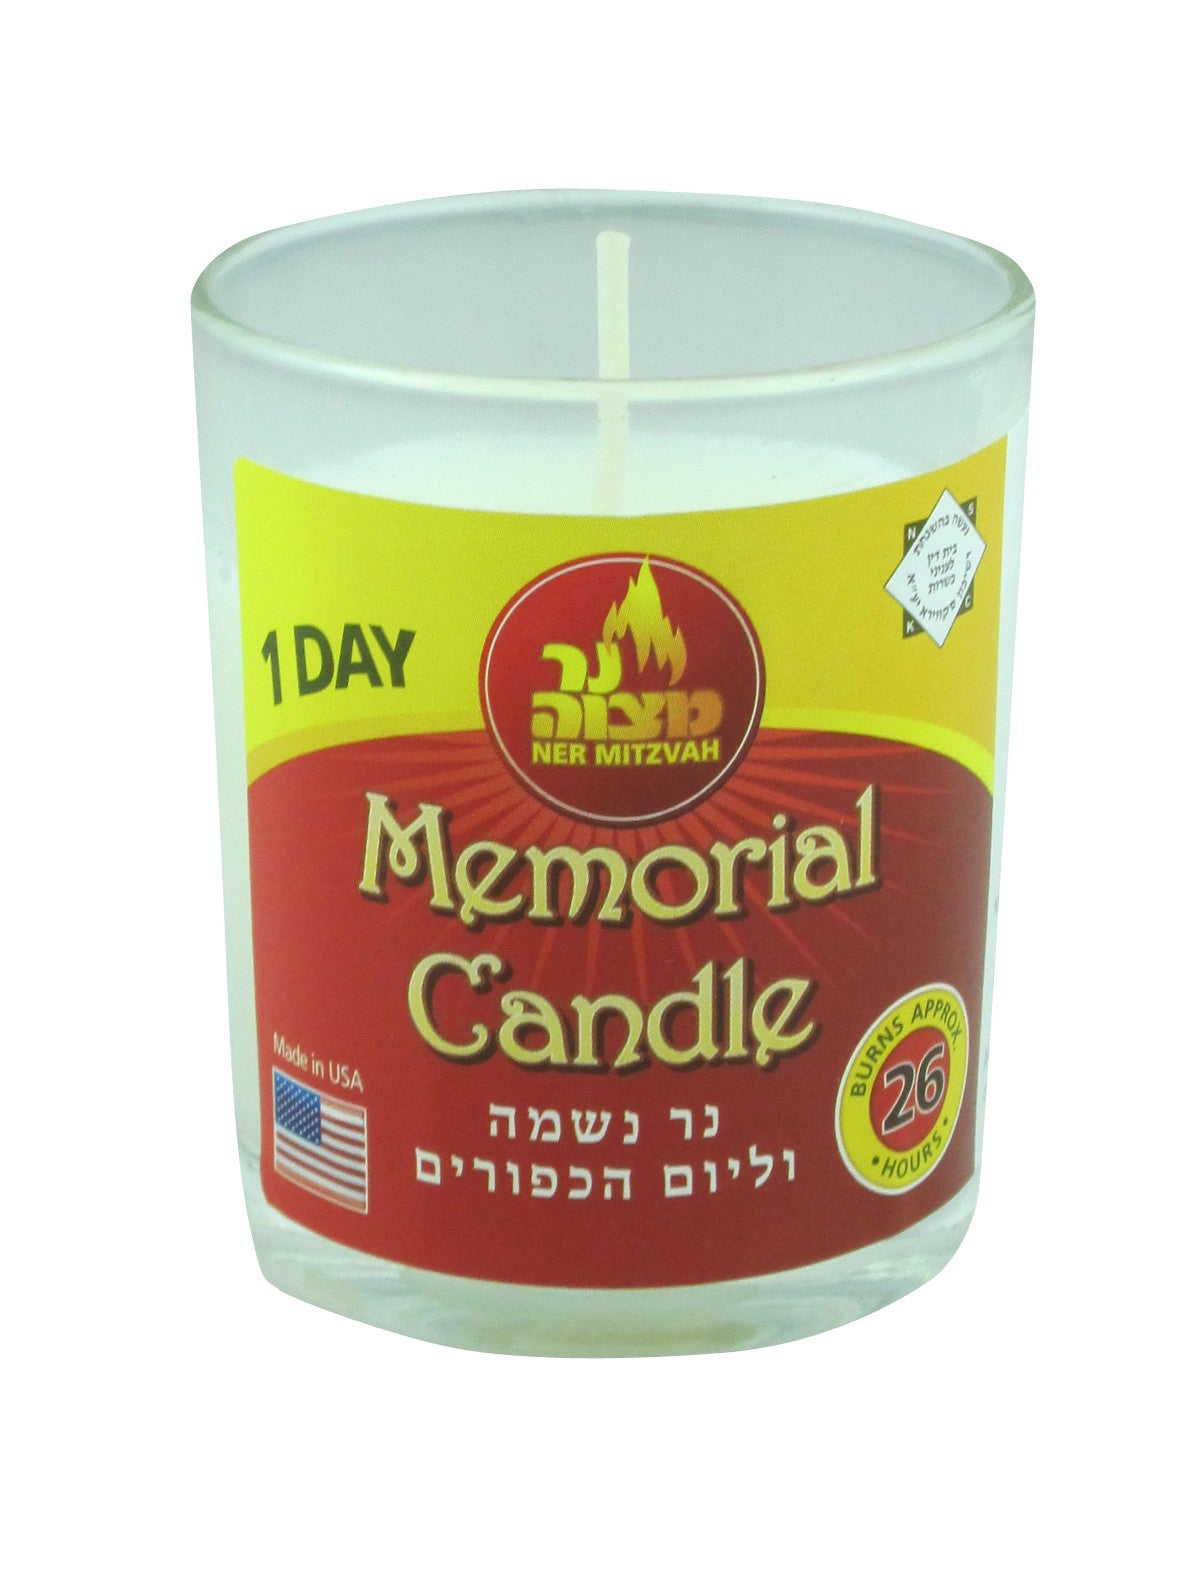 Ner Mitzvah 1 Day Memorial Candle in Glass Jar - 30pk